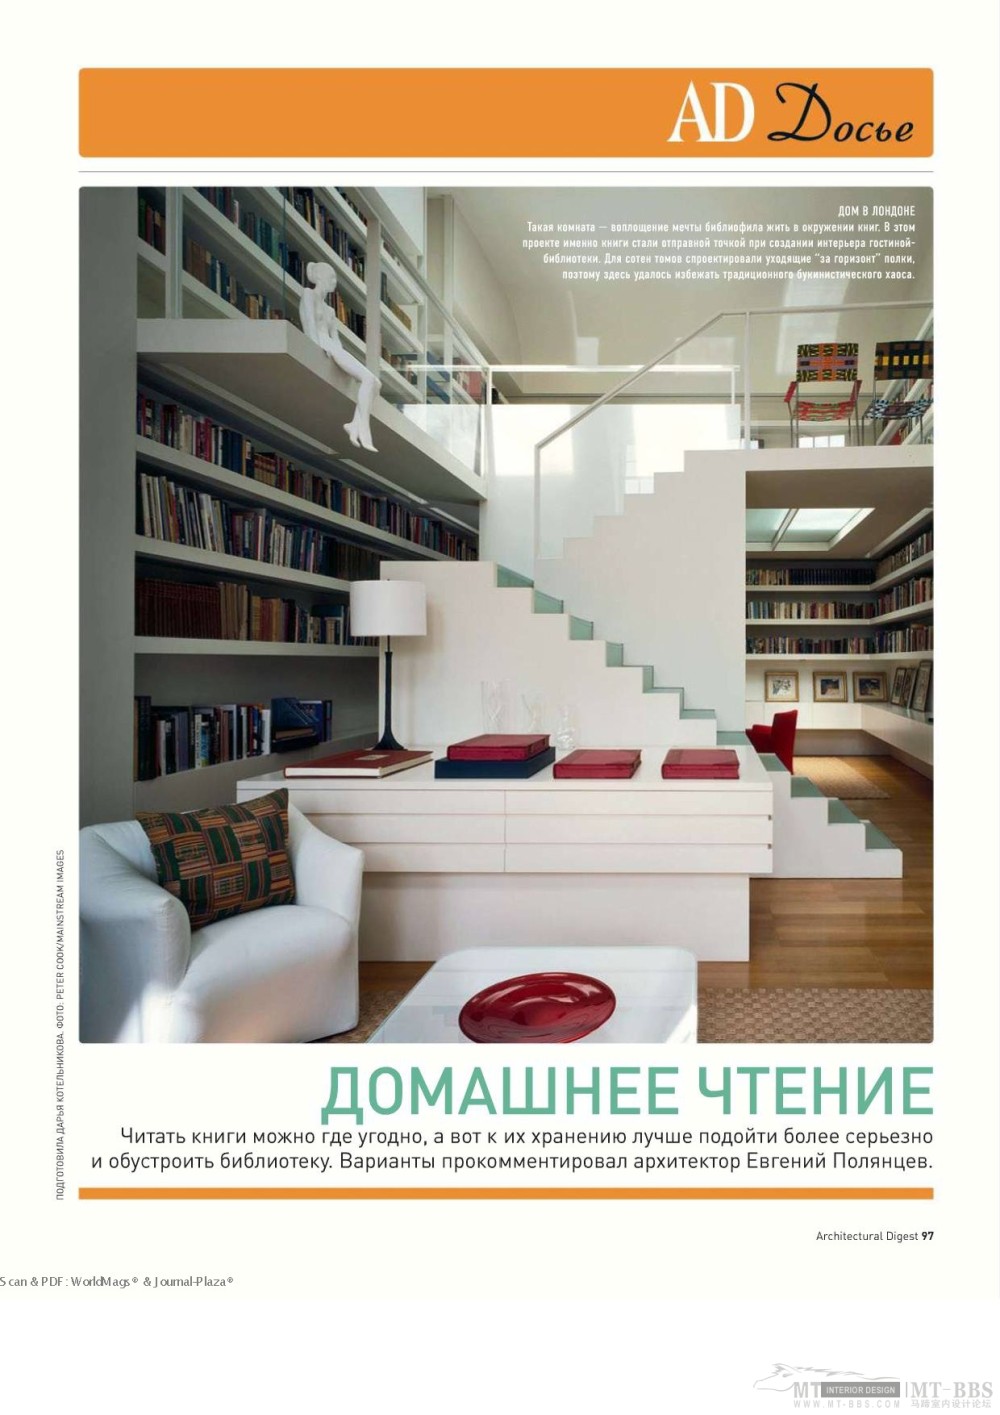 《AD Russia》2010-09(国外陈设设计杂志)_AD Russia 2010-09MT-BBS-099.jpg